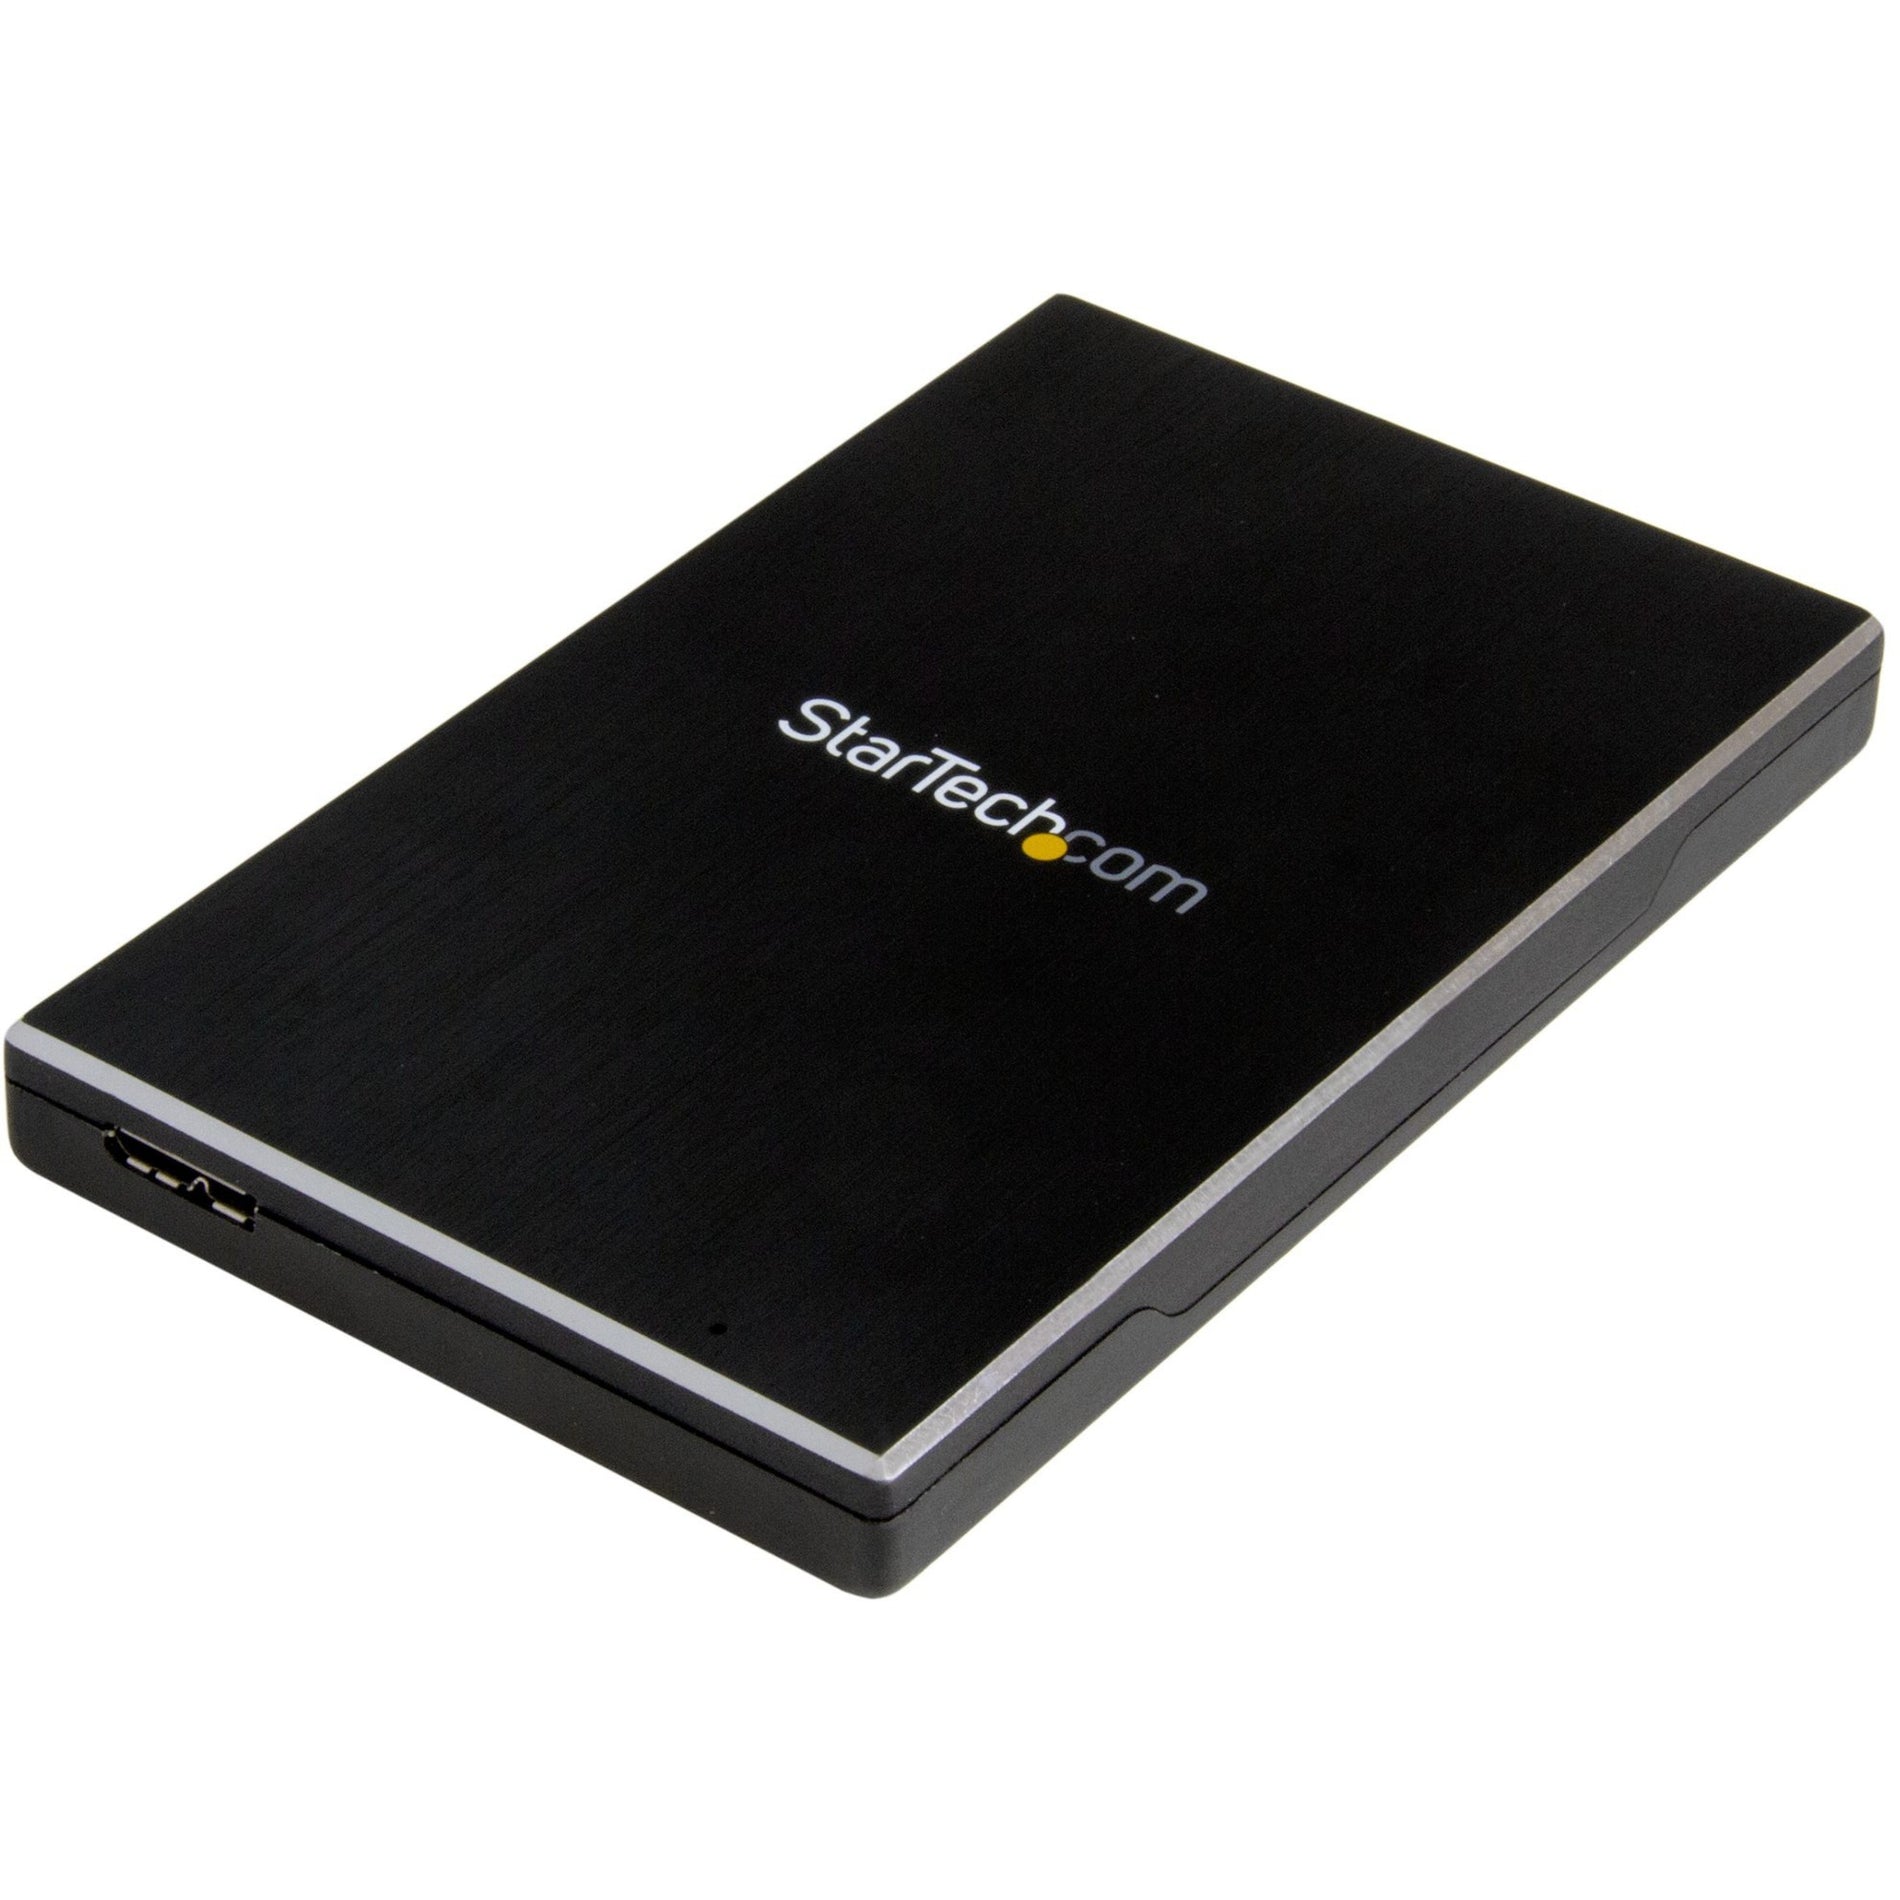 StarTech.com S251BMU313 USB 3.1 Gen 2 (10 Gbps) Enclosure for 2.5" SATA Drives, Ultra-fast, Portable Single-Drive Enclosure for SSD/HDD, Aluminum